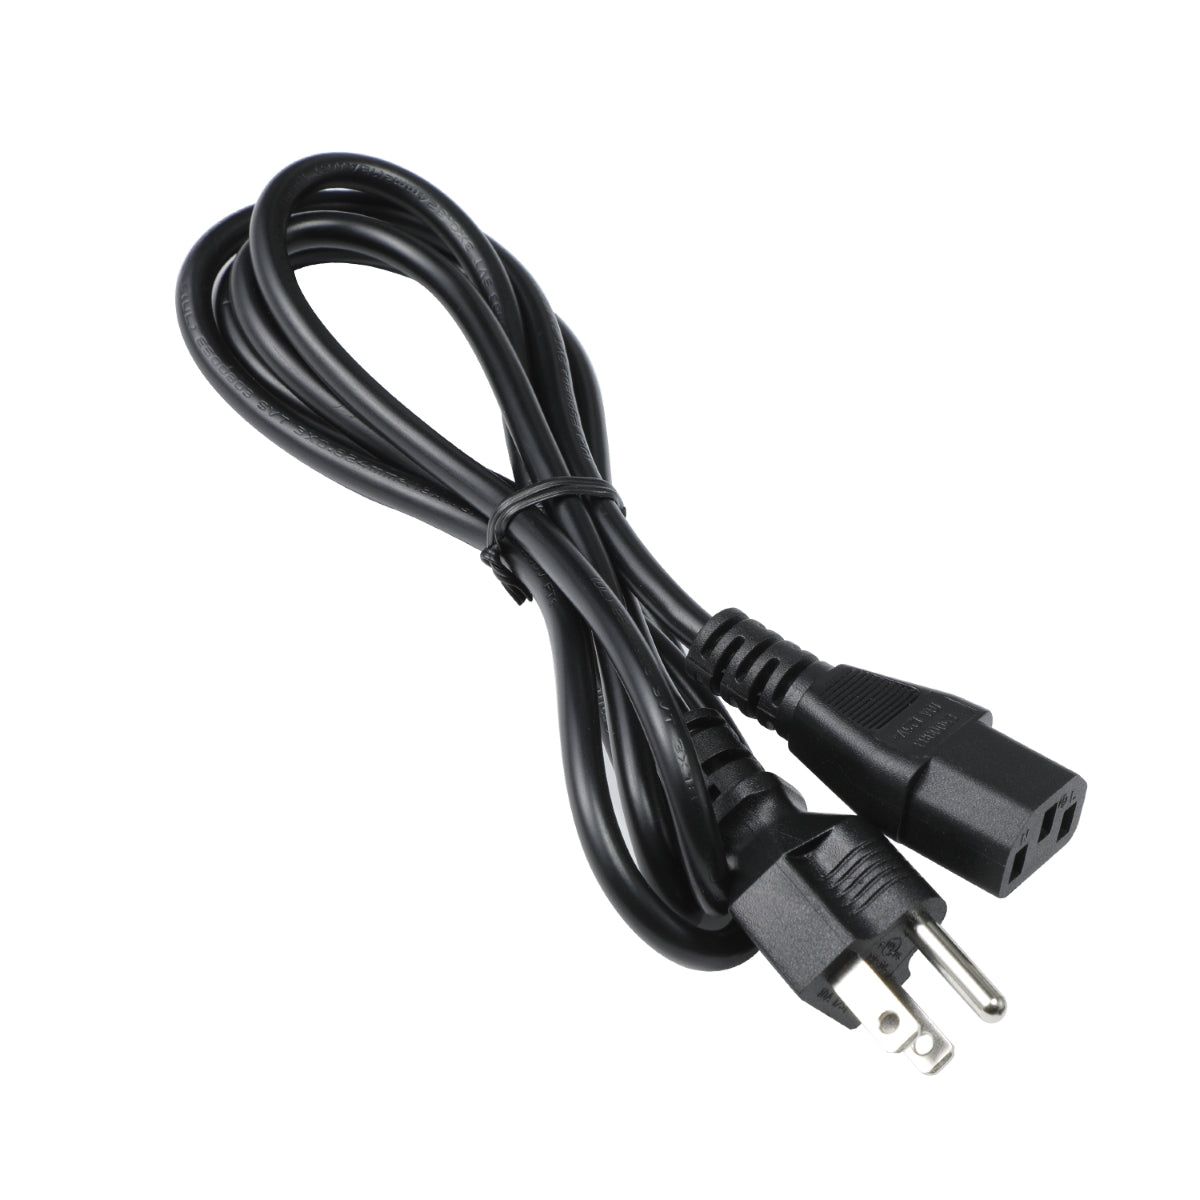 Power Cable for HP ENVY TE01 Series Desktop